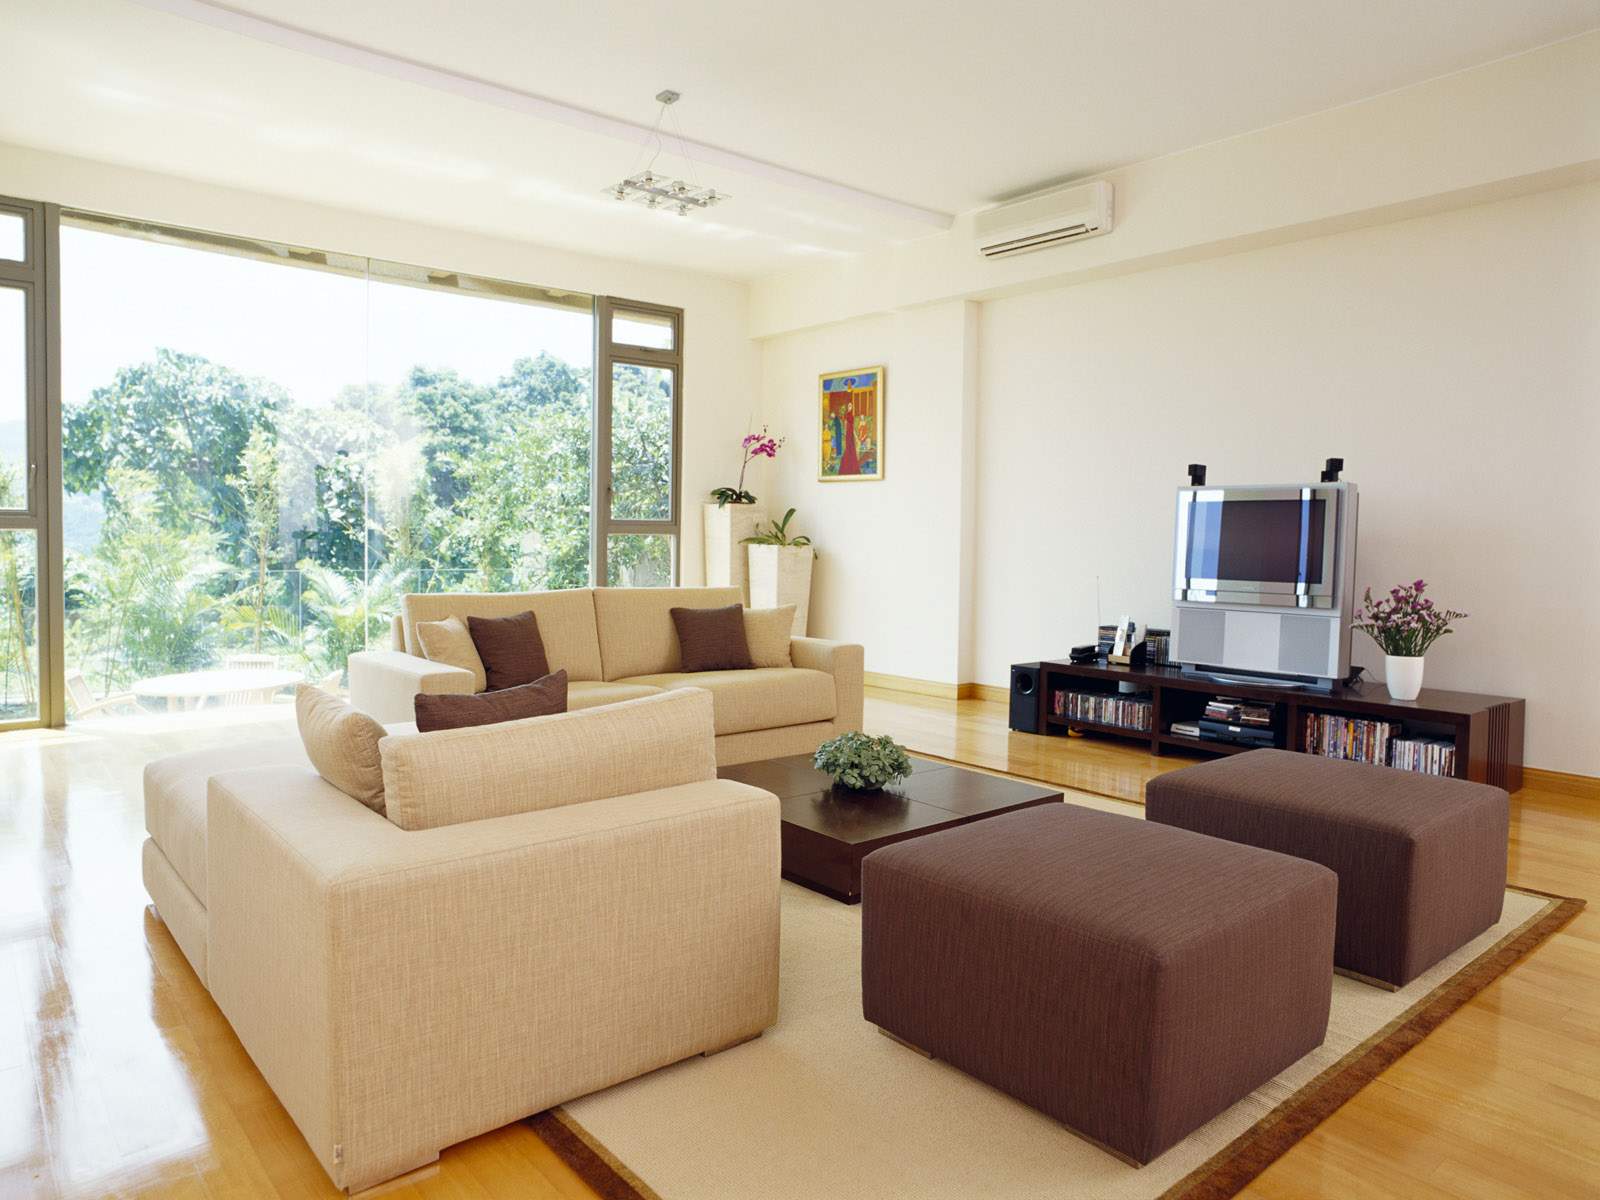 Modern homes interior designs ideas